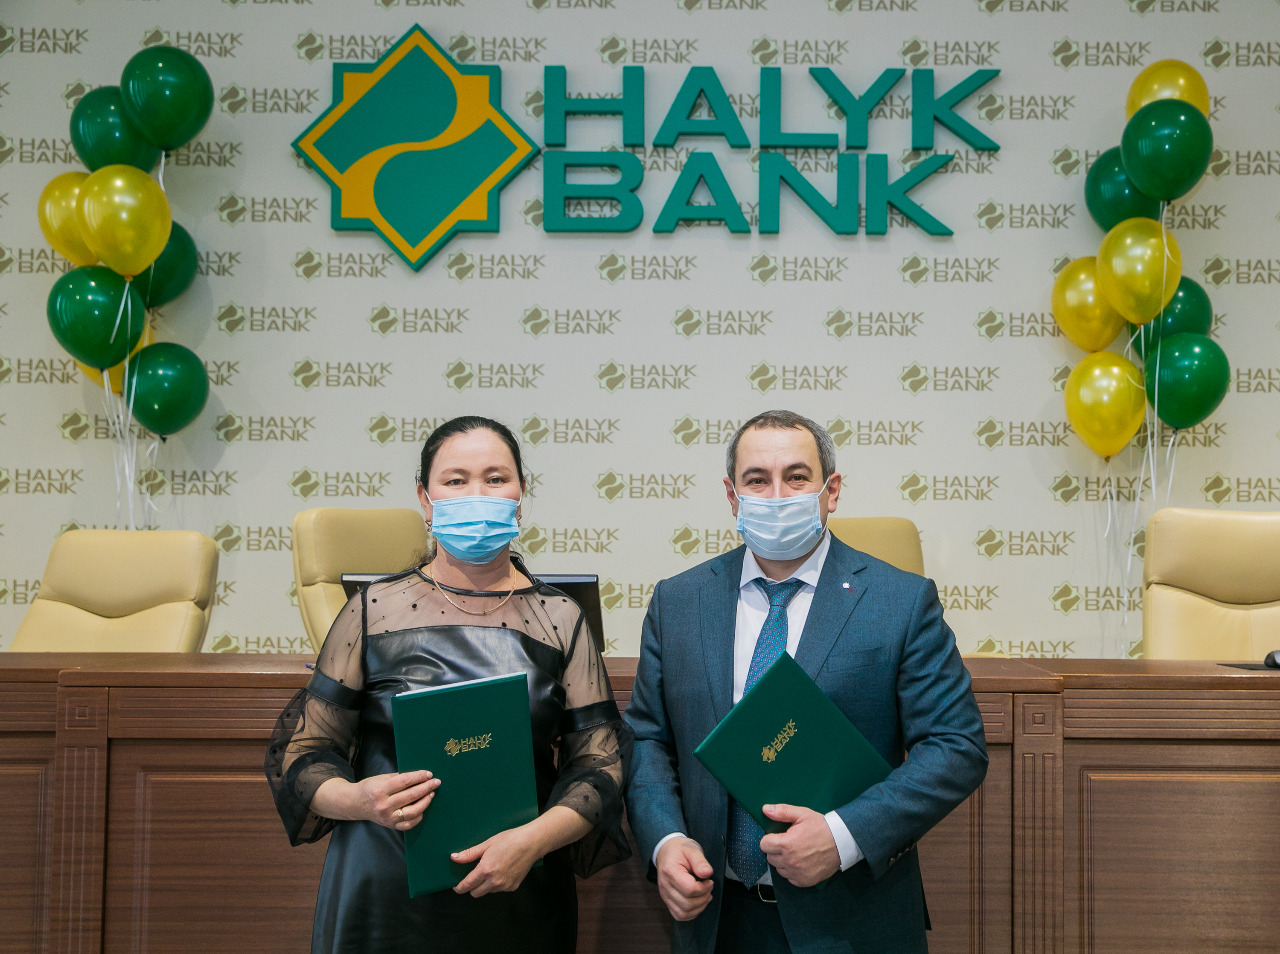 Халык страхование. Халык банк. Halyk Bank Kazakhstan. Halyk Bank Kazakhstan головной офис. Халык банк Темиртау офис.